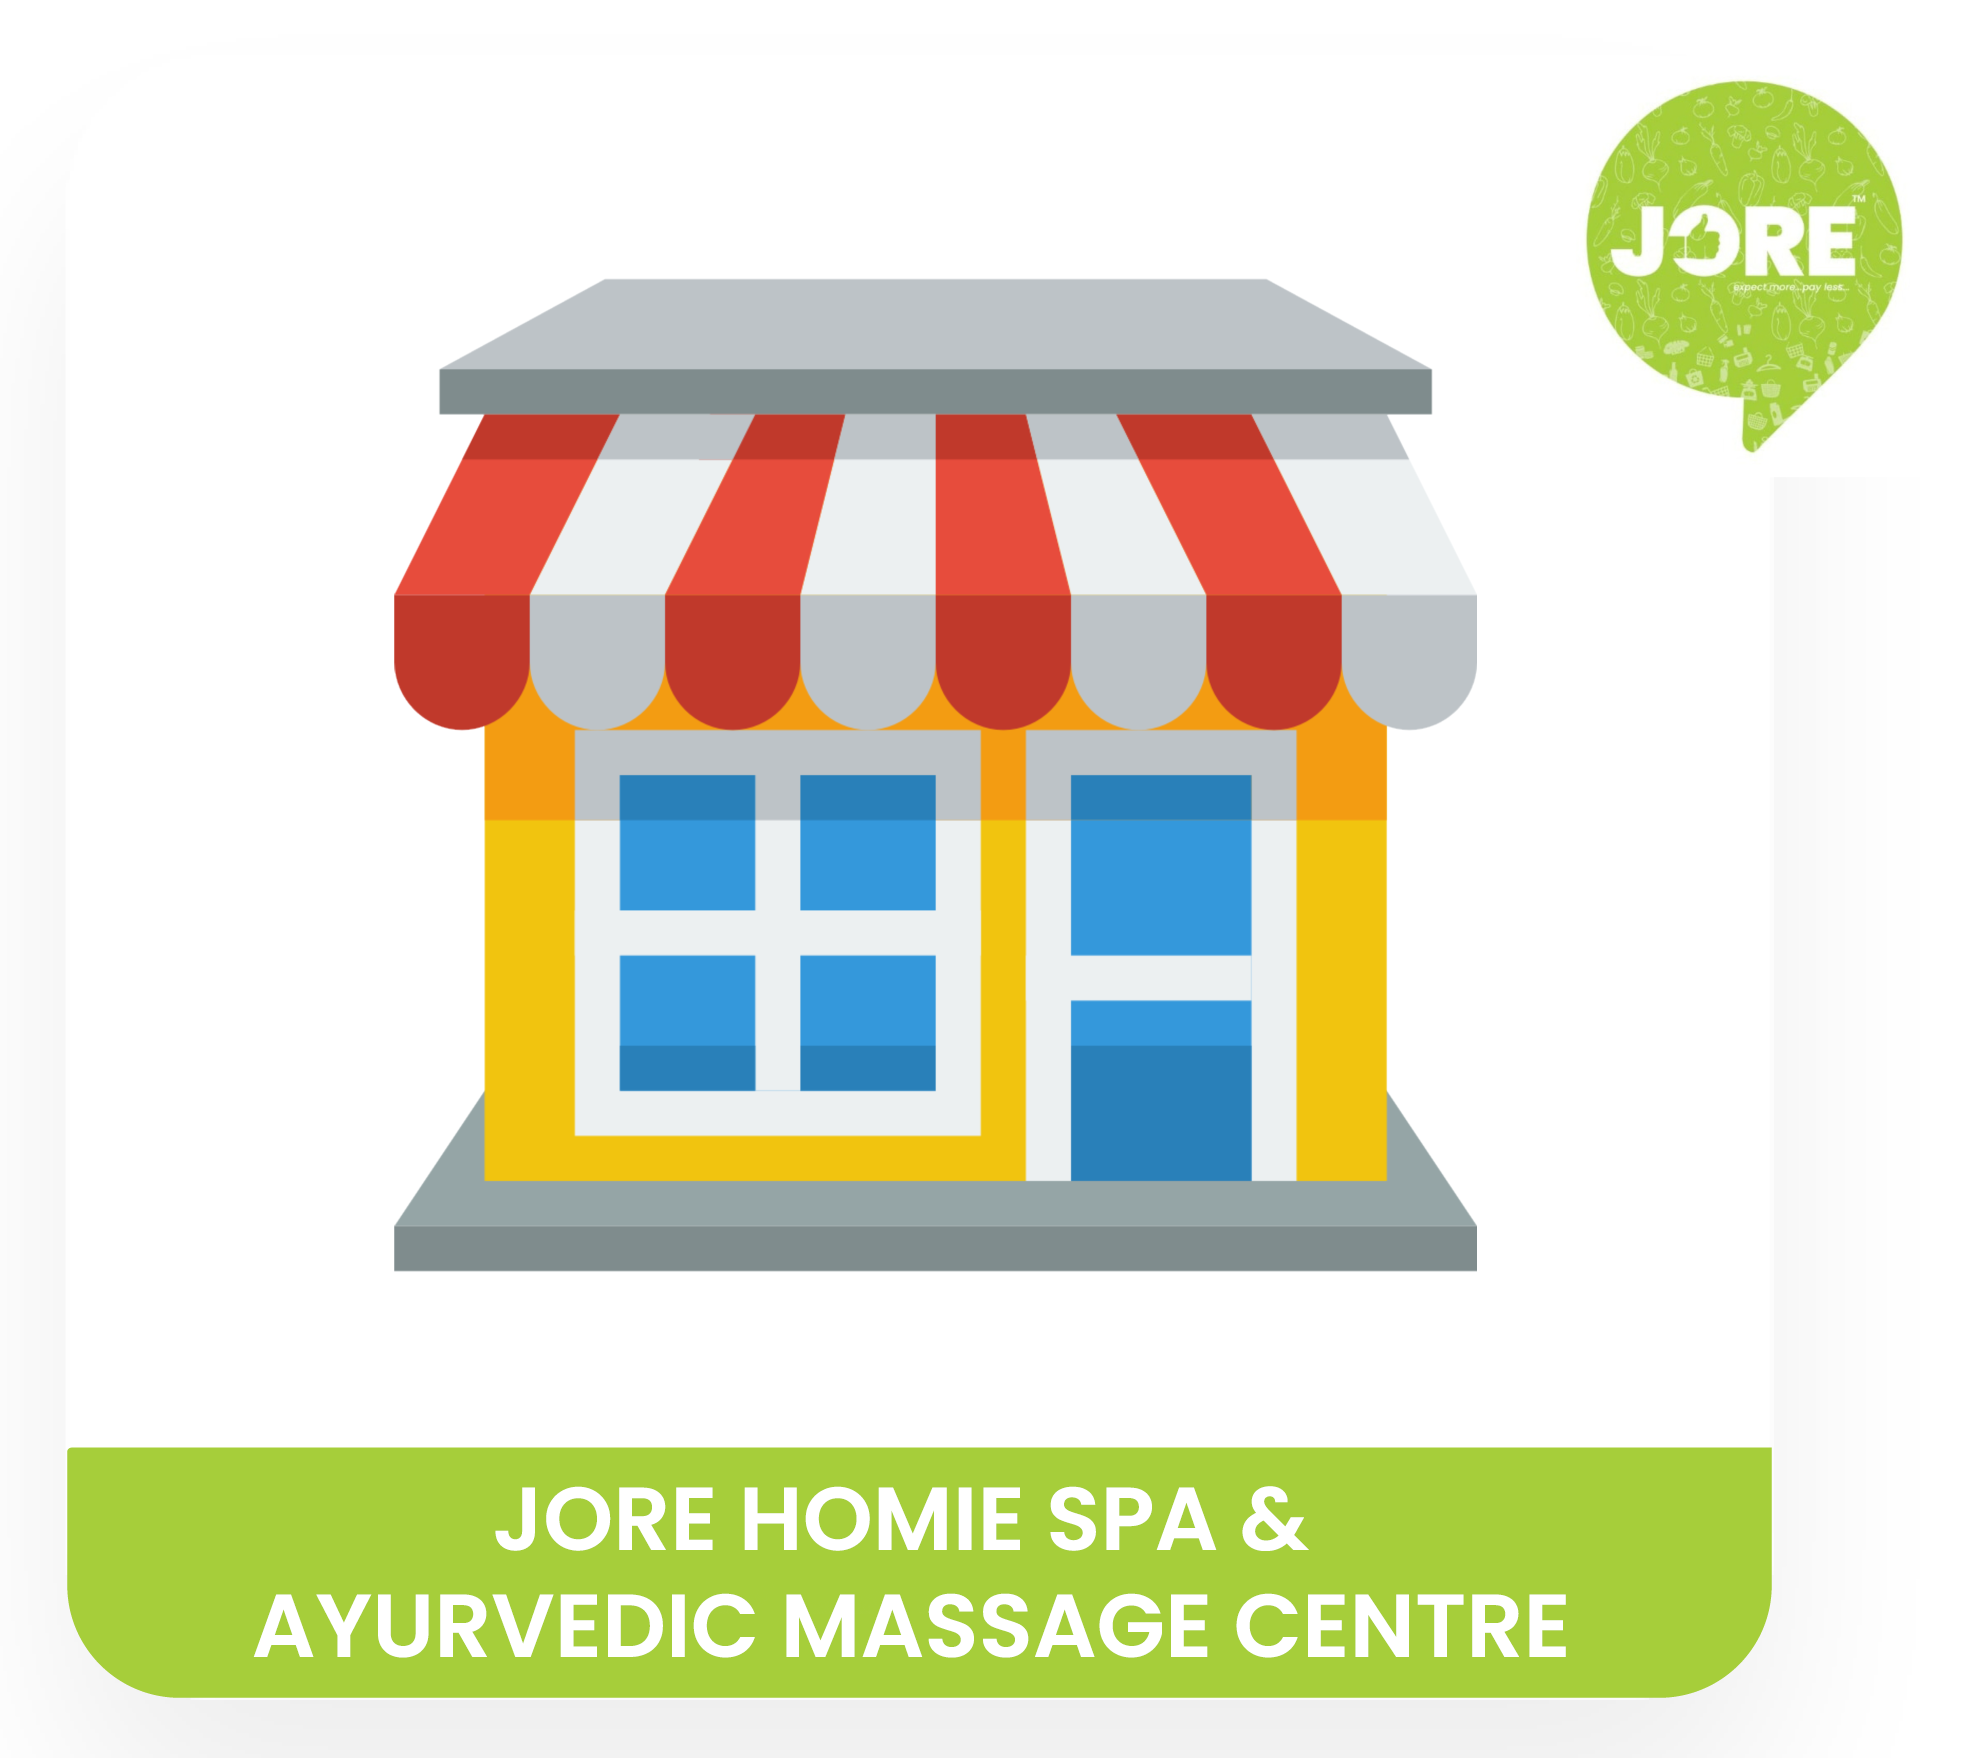 Jore Homie Spa & Ayurvedic Massage Centre